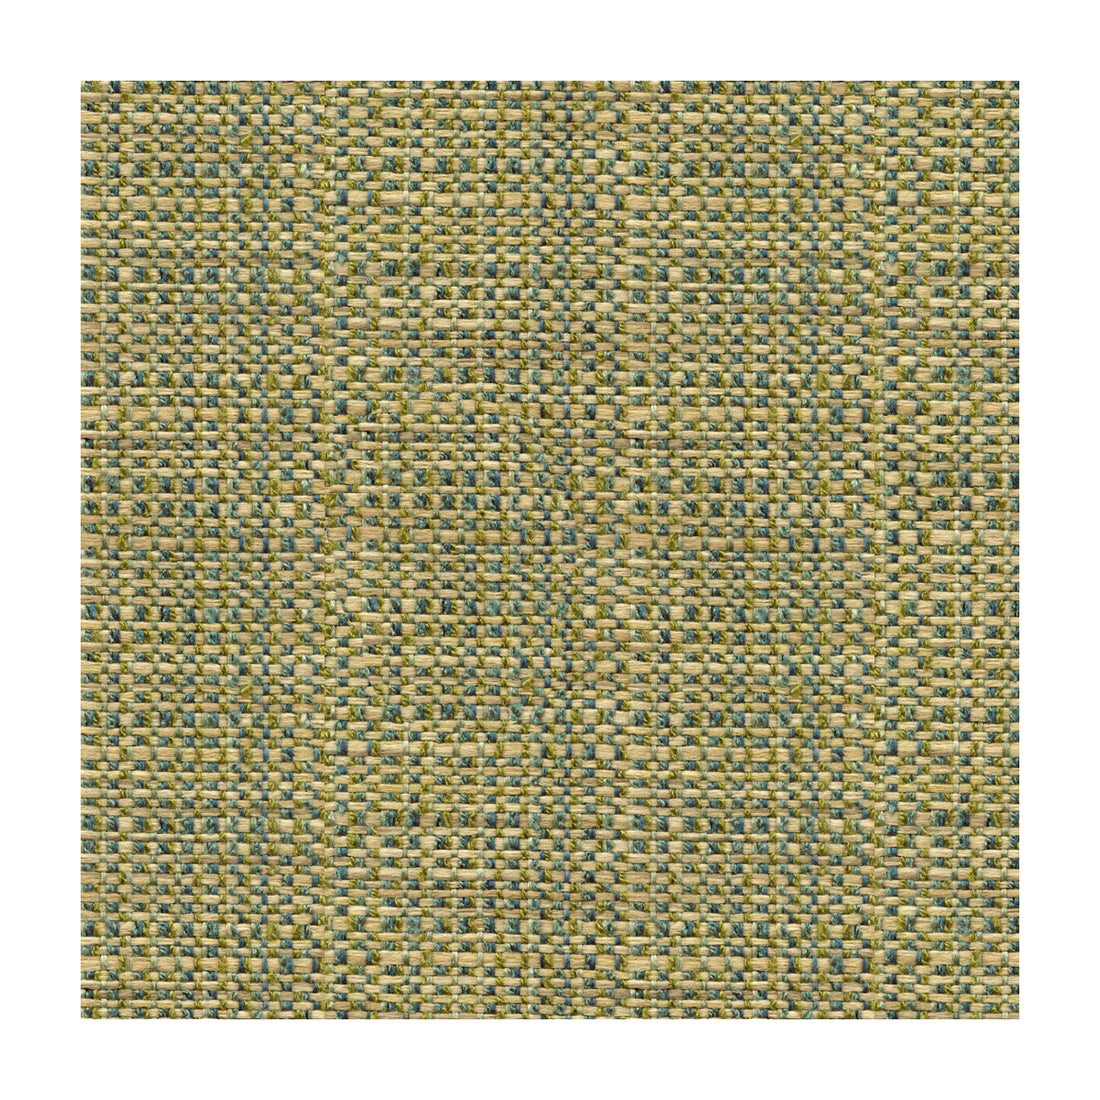 Kravet Smart fabric in 30667-315 color - pattern 30667.315.0 - by Kravet Smart